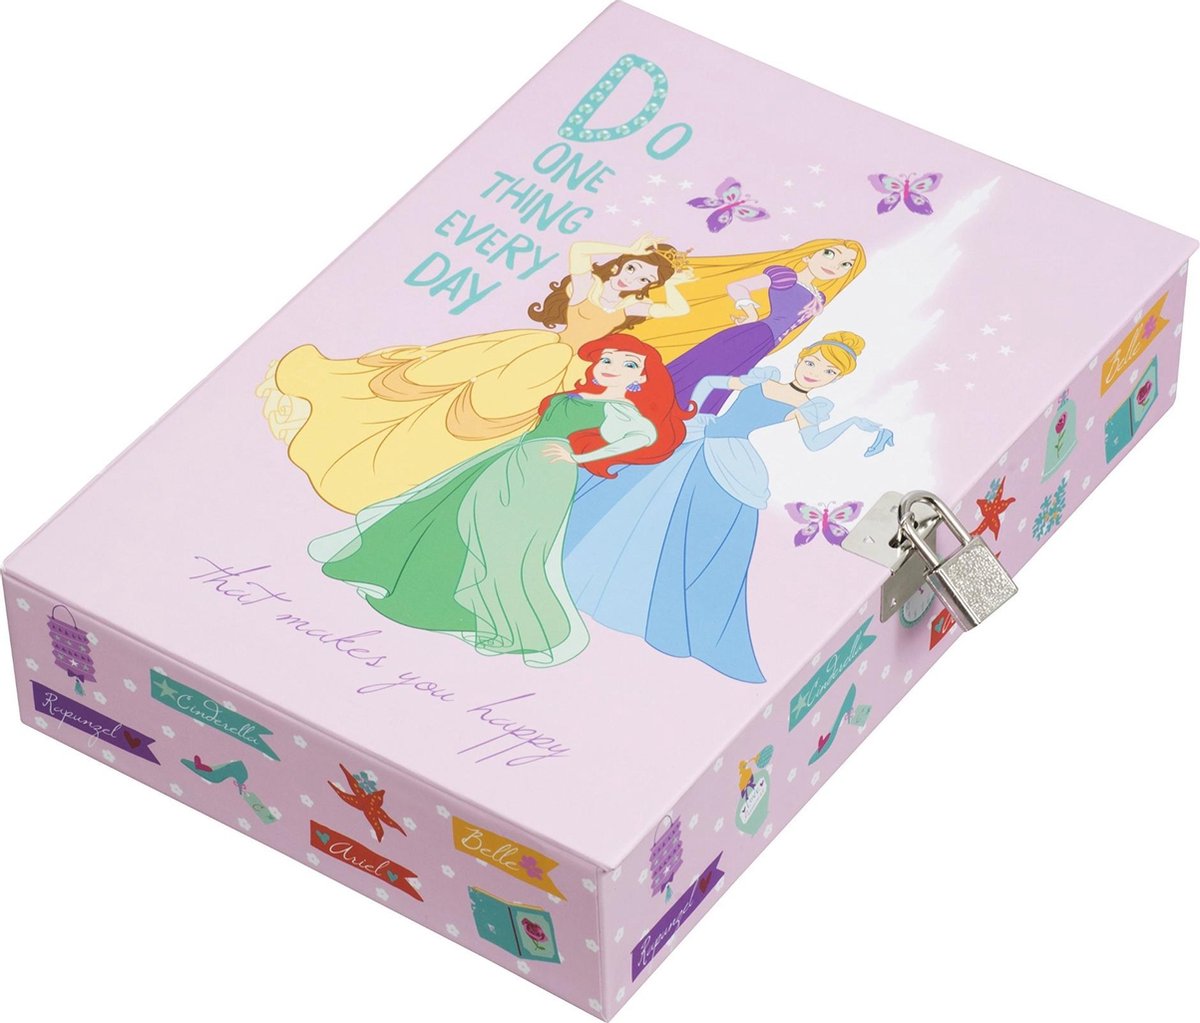 Disney Princess geheim dagboek notitieboek